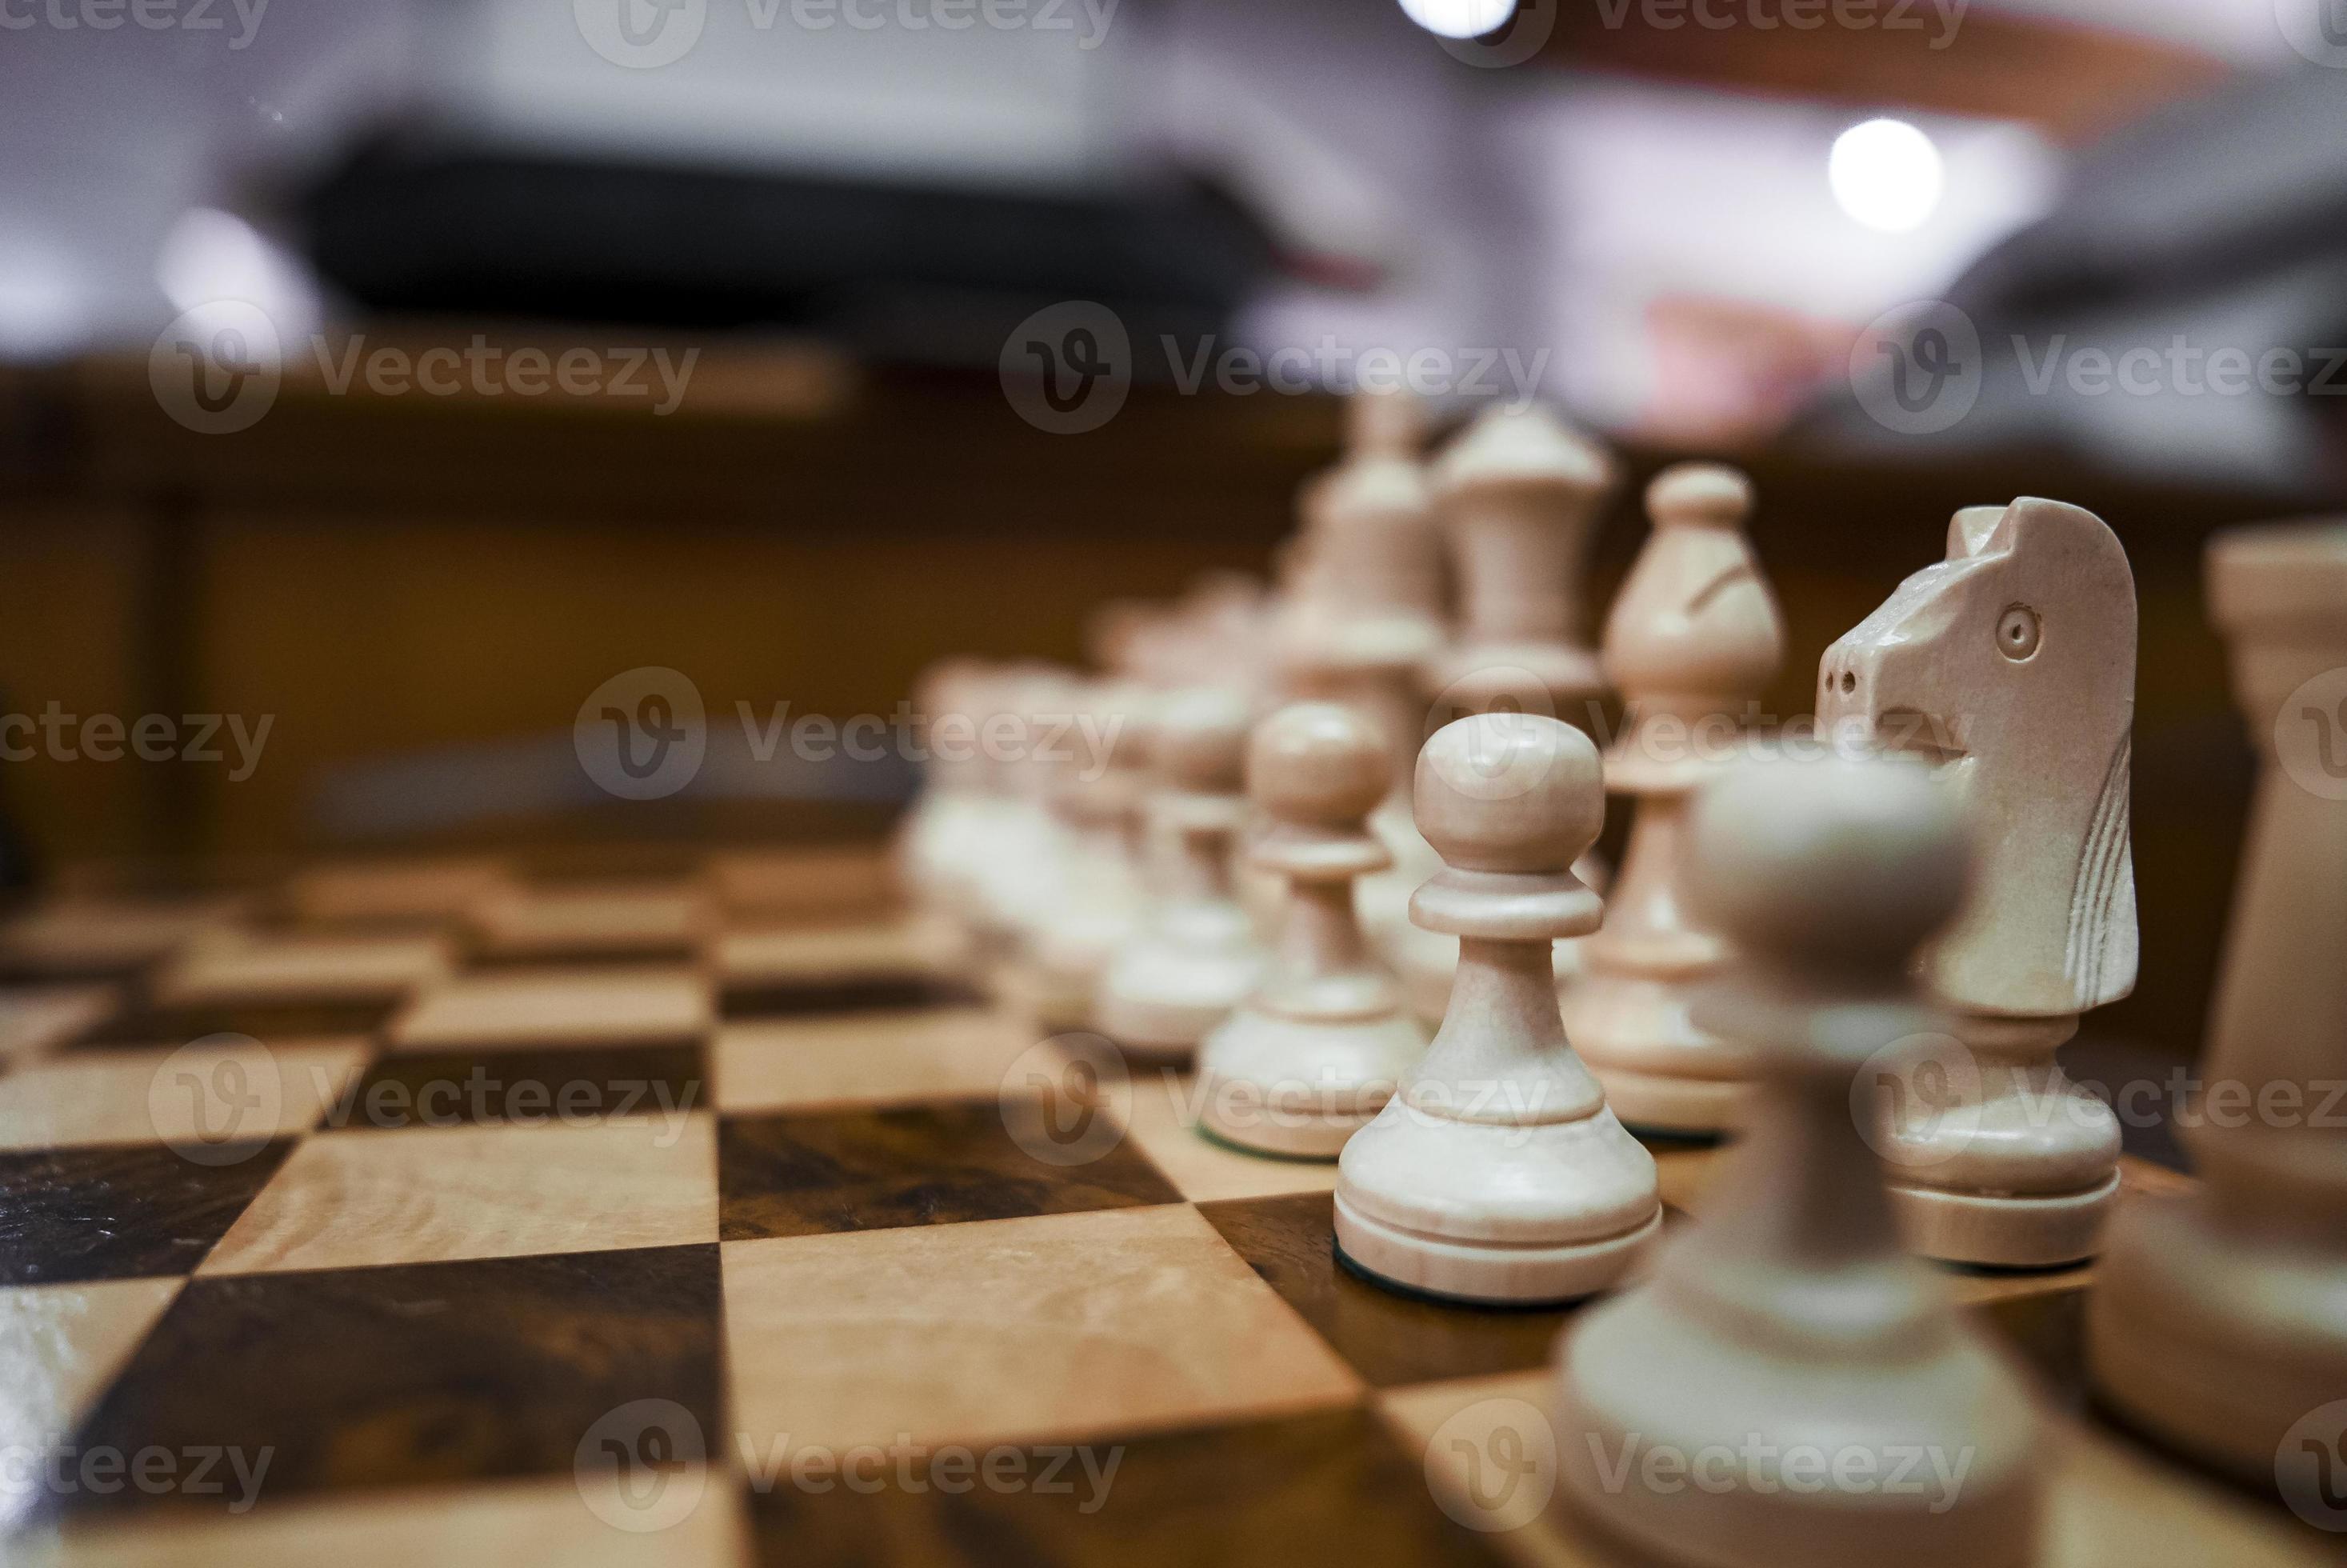 branco de madeira xadrez peças arranjado em tabuleiro de xadrez dentro hotel  21200910 Foto de stock no Vecteezy